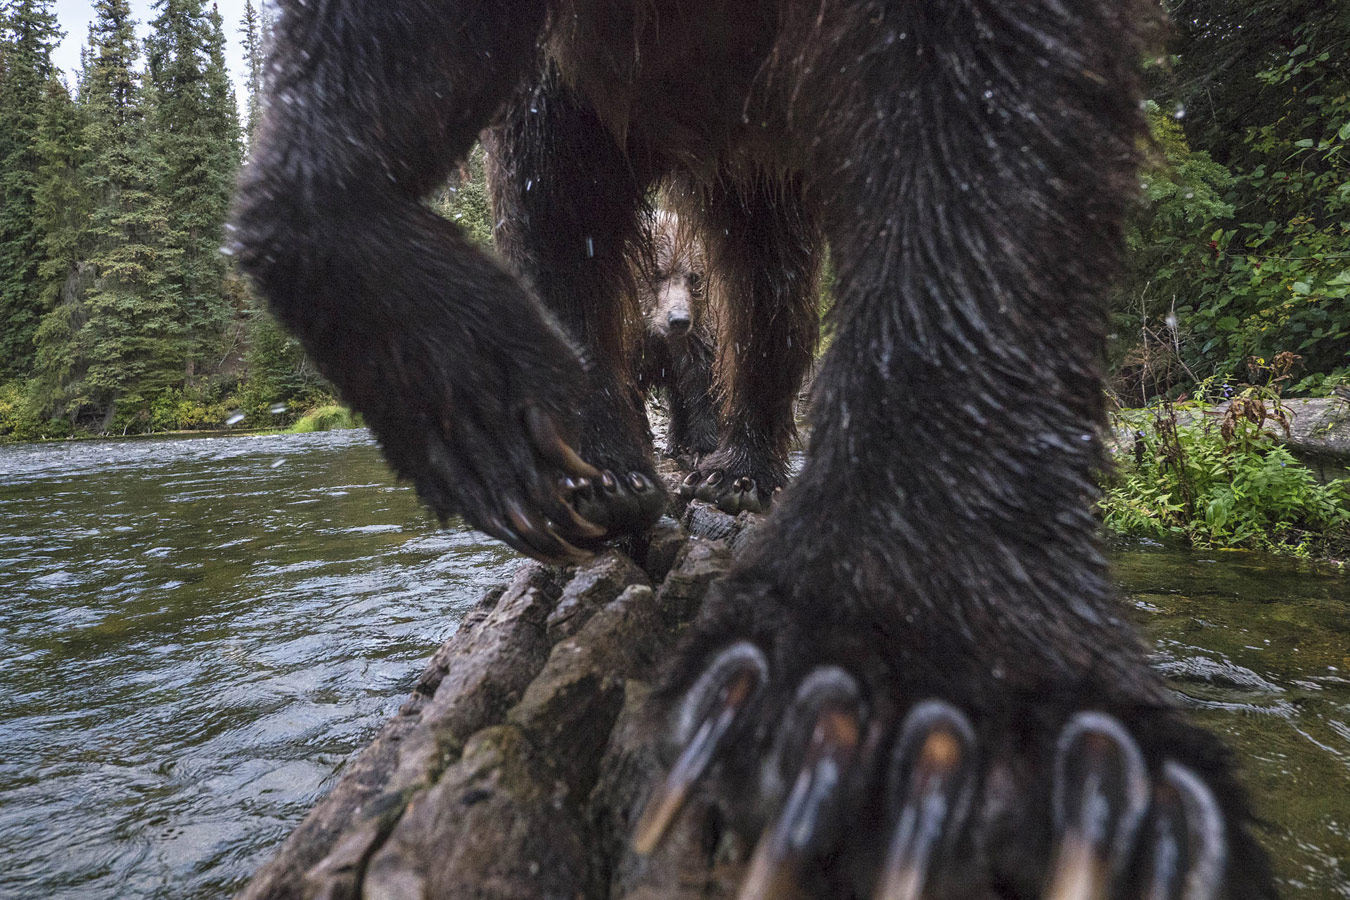 © Peter Mather, Mammals, Oasis Photo Contest — International Award of Wildlife Photography